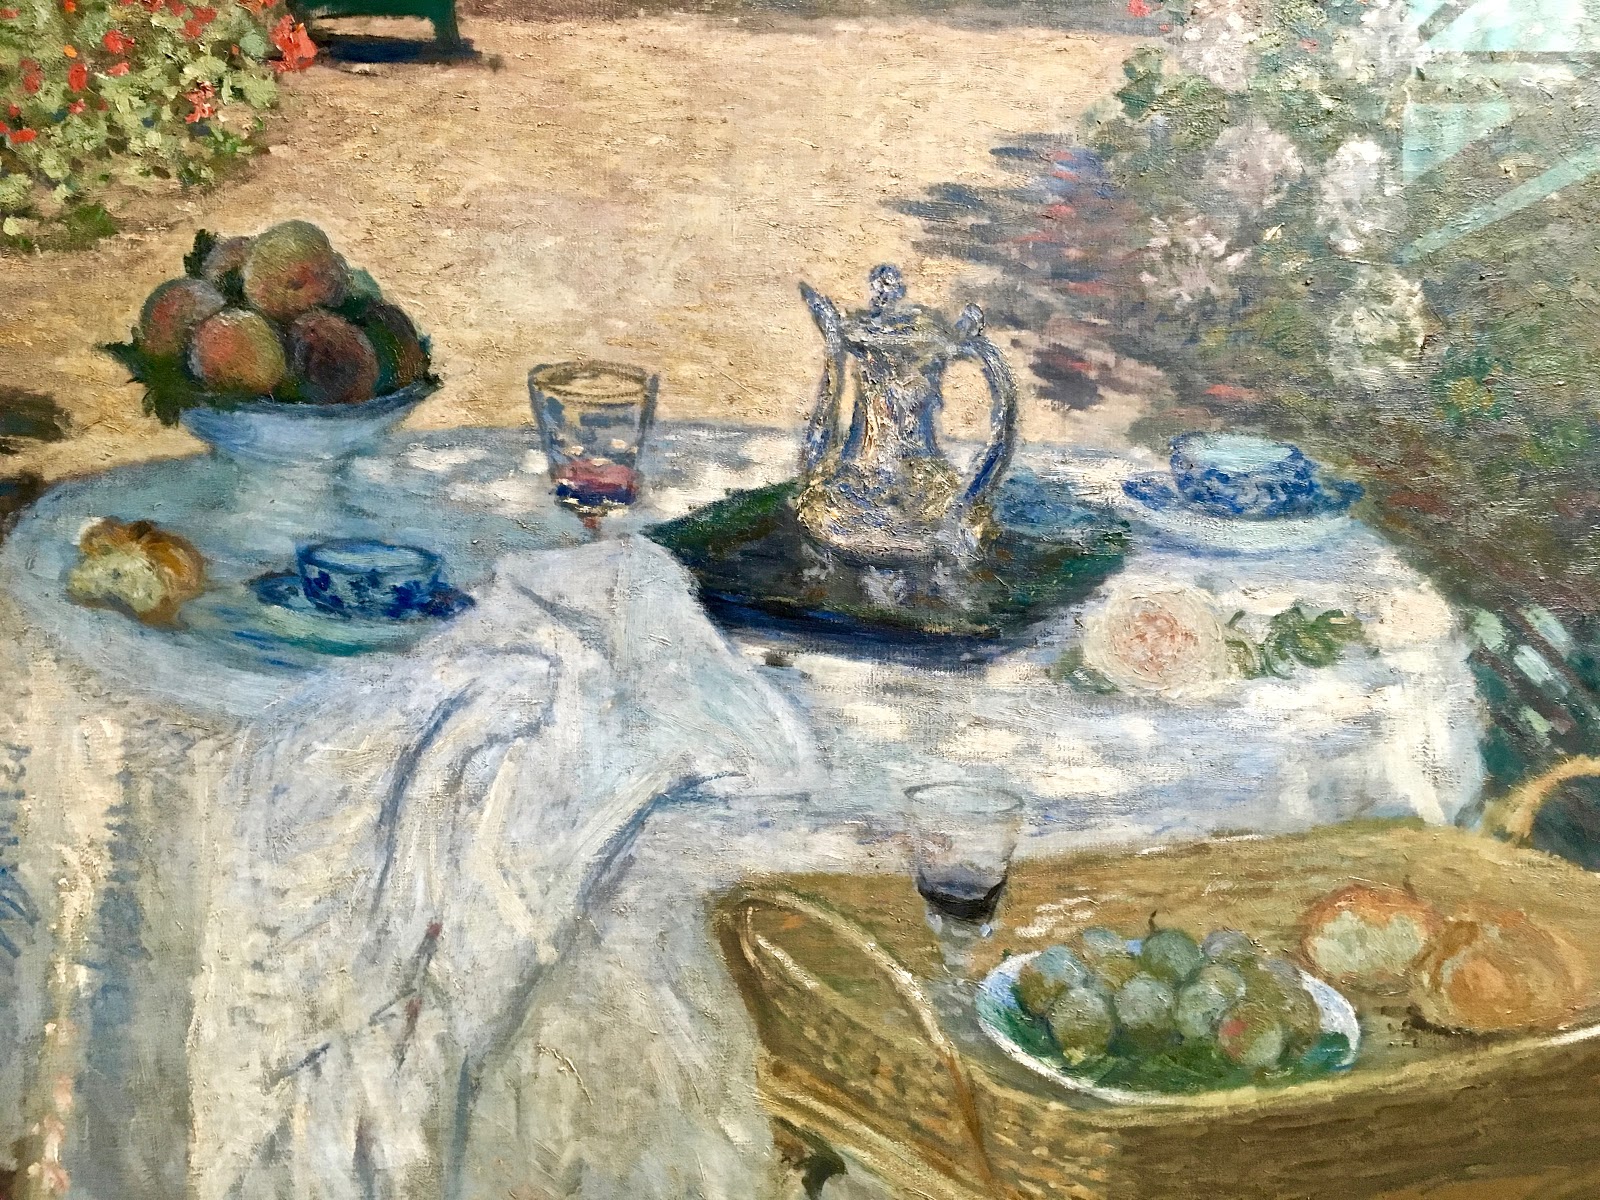 Claude+Monet-1840-1926 (774).jpg